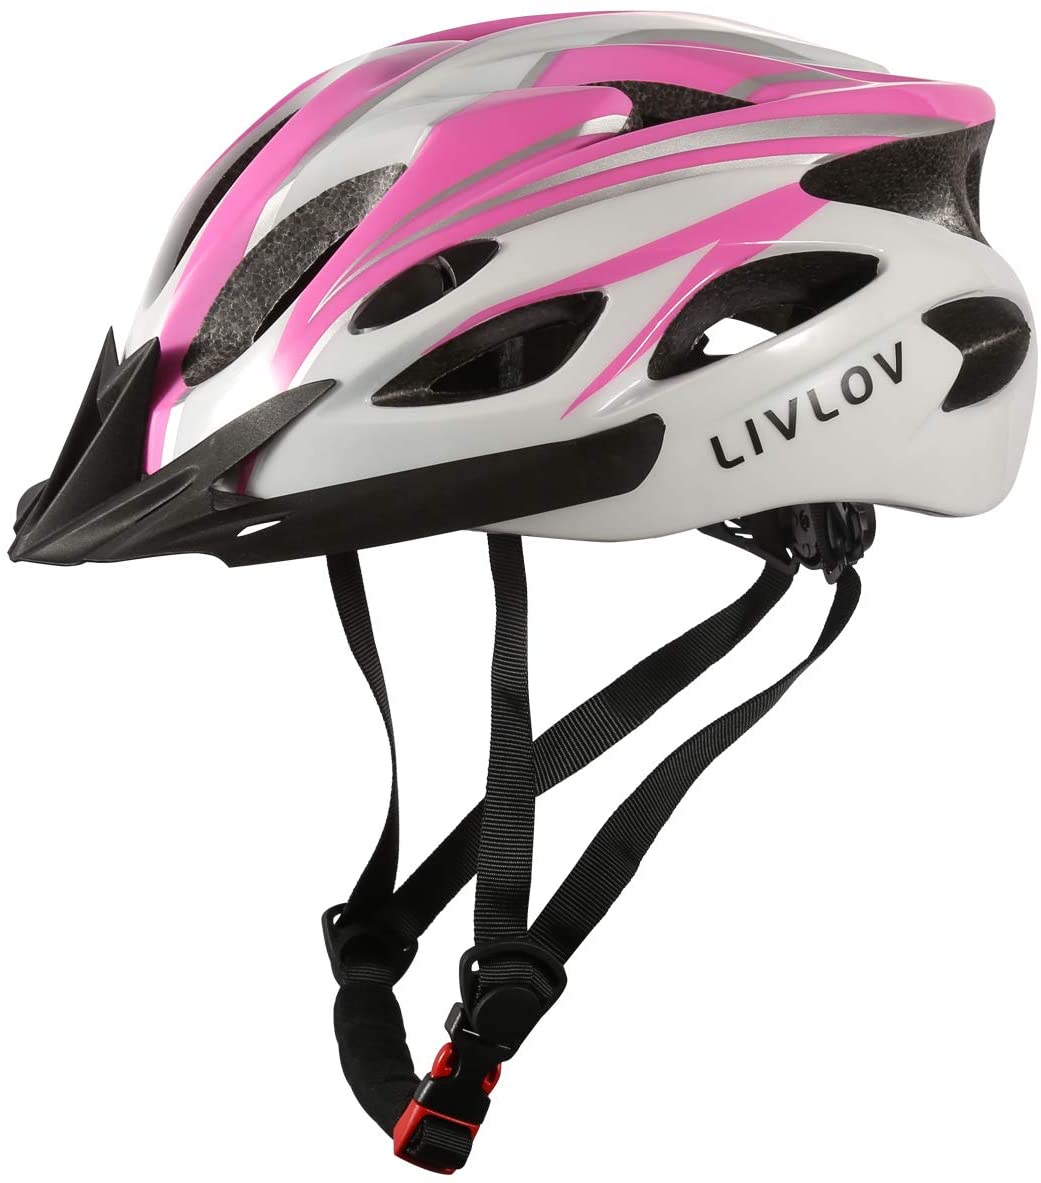 LIVLOV Adult Cycling Bike Helmet with Detachable Visor & Pads